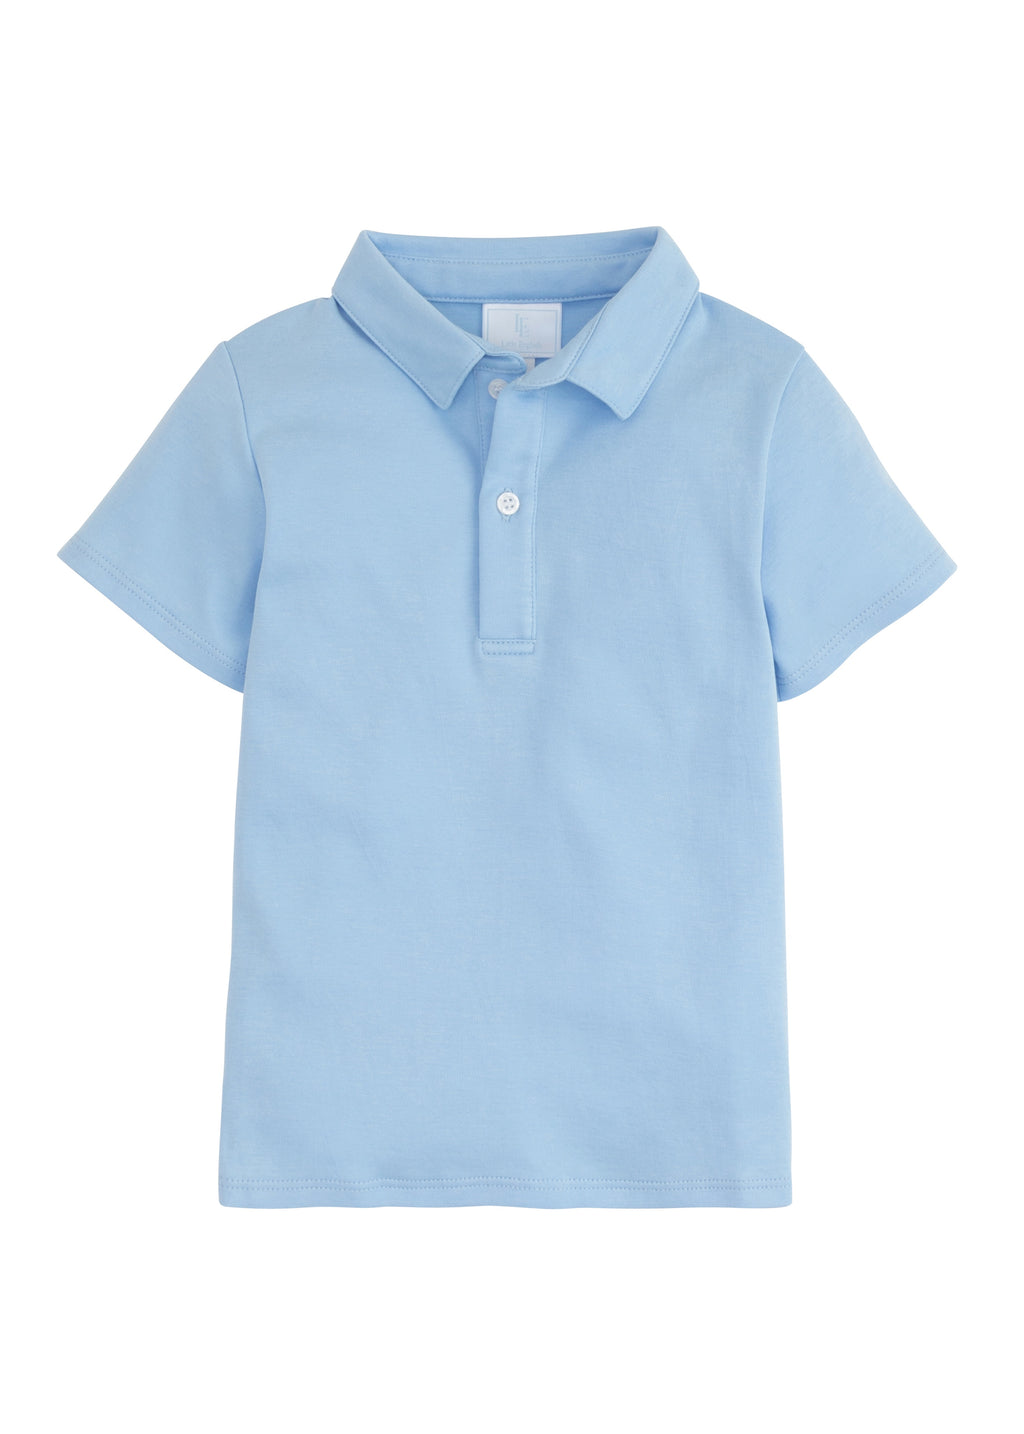 Little English Short Sleeve Polo in Light Blue